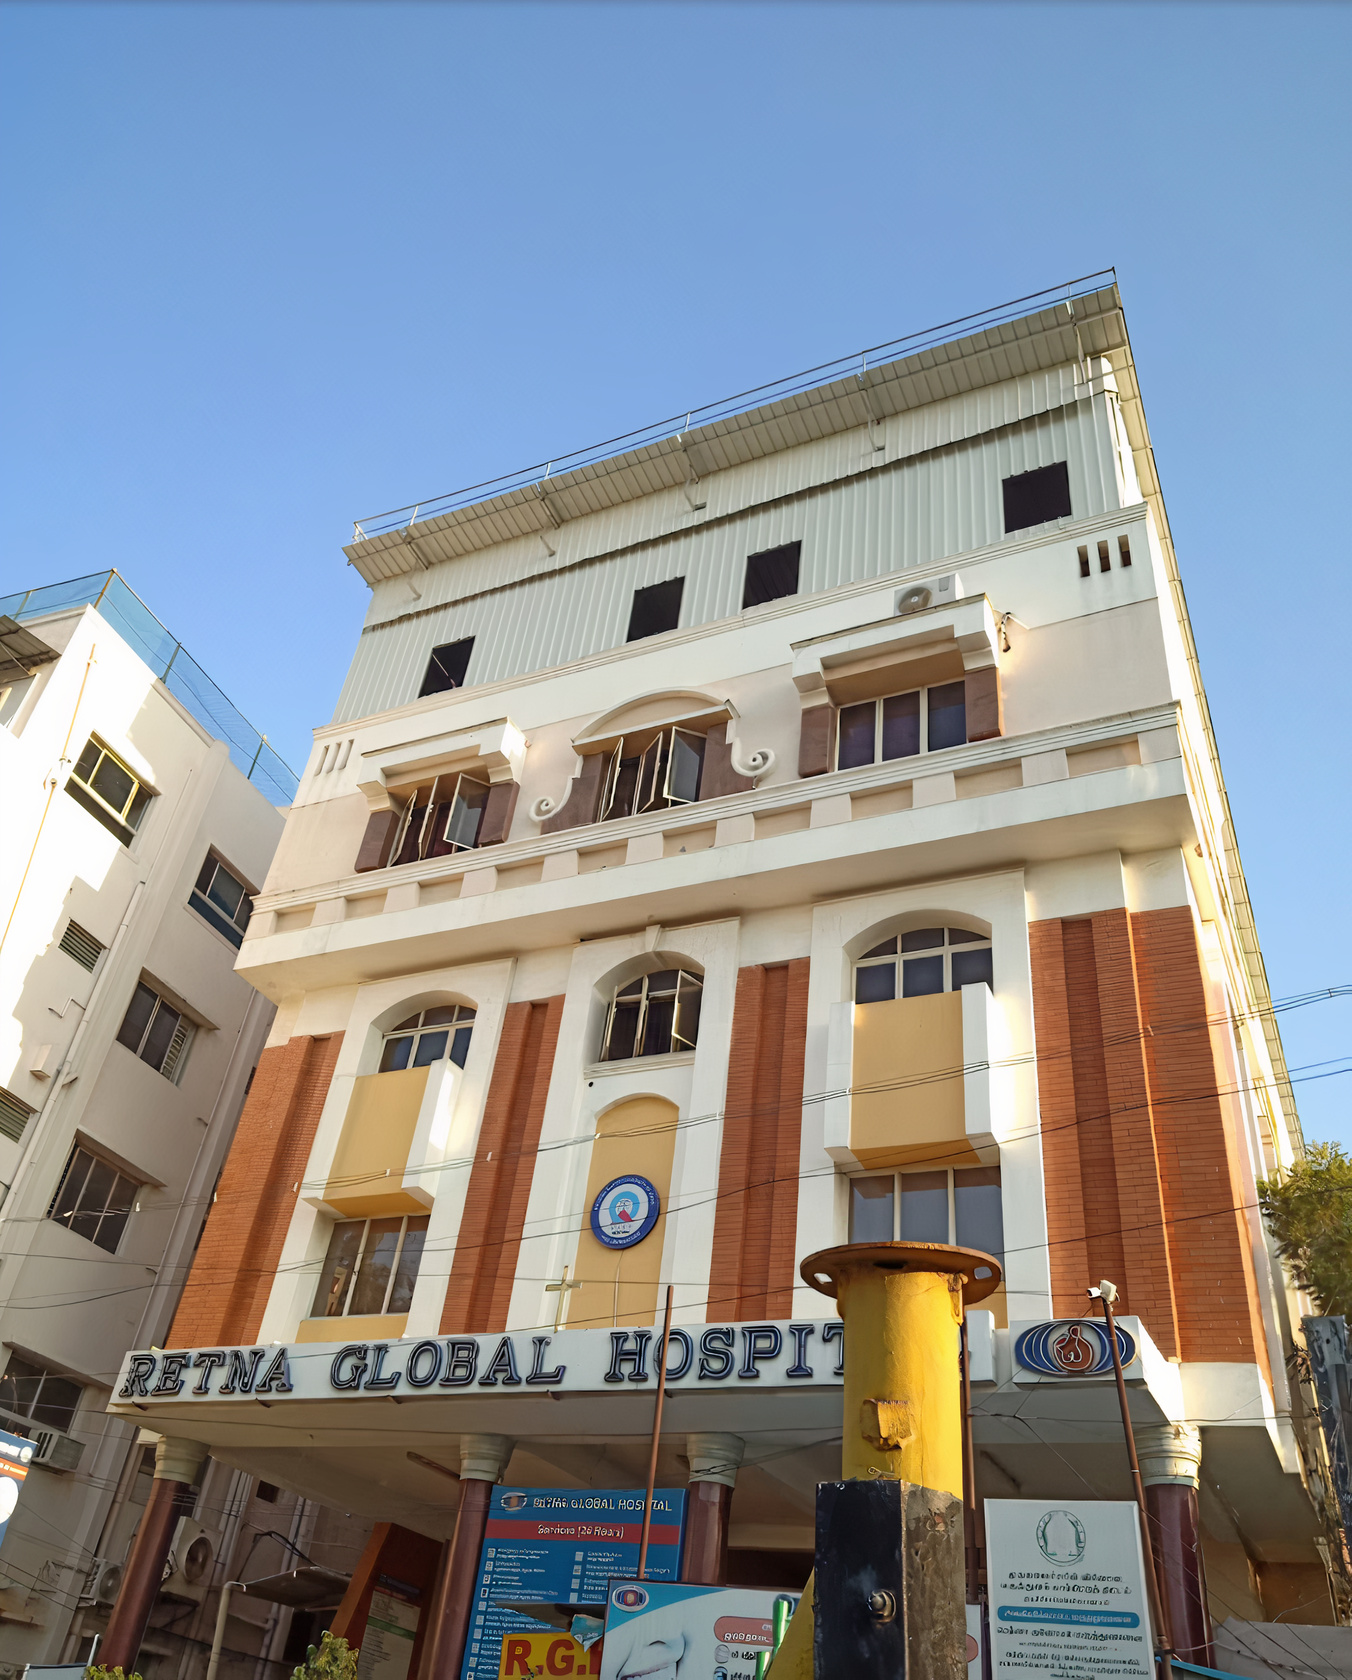 Retna Global Hospital-photo